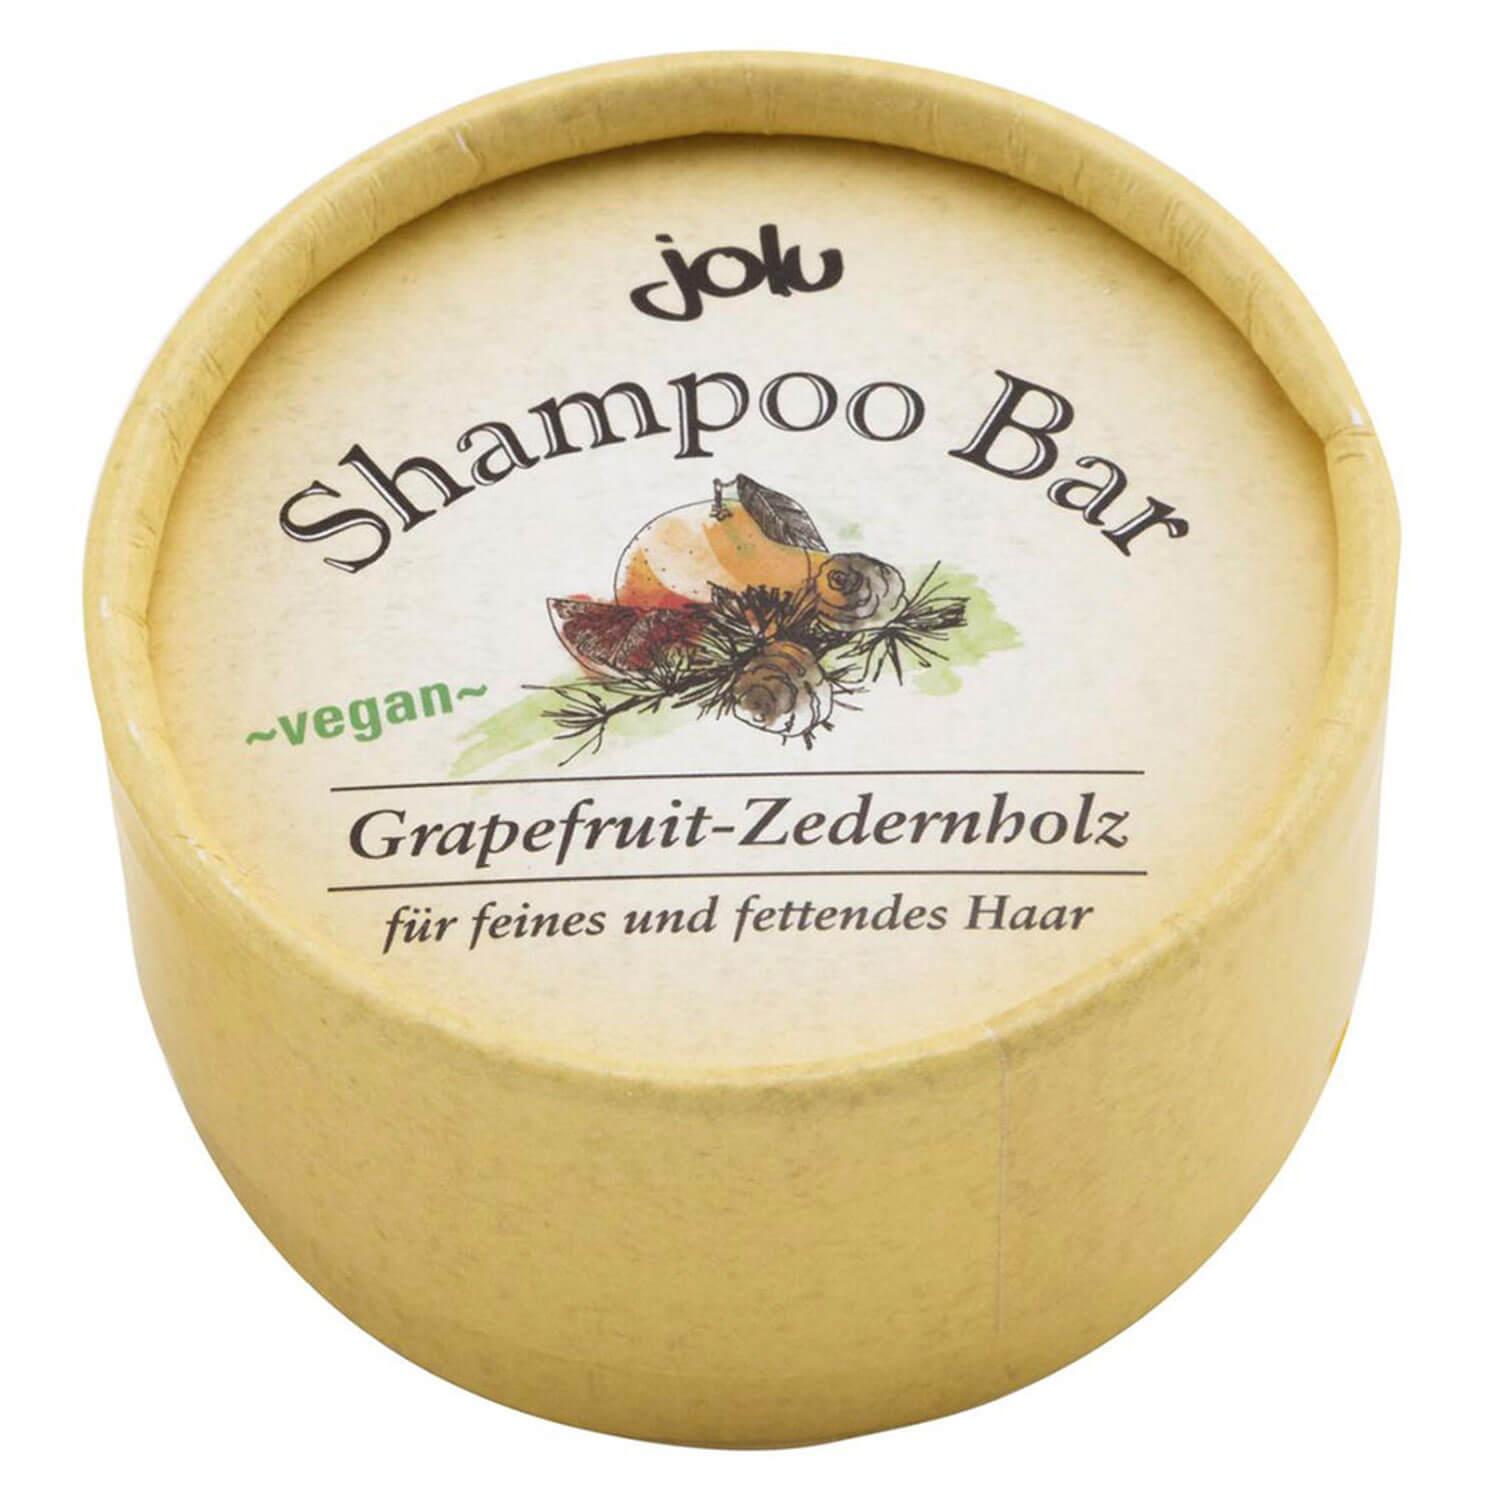 jolu - Shampoo Bar Grapefruit Cedarwood